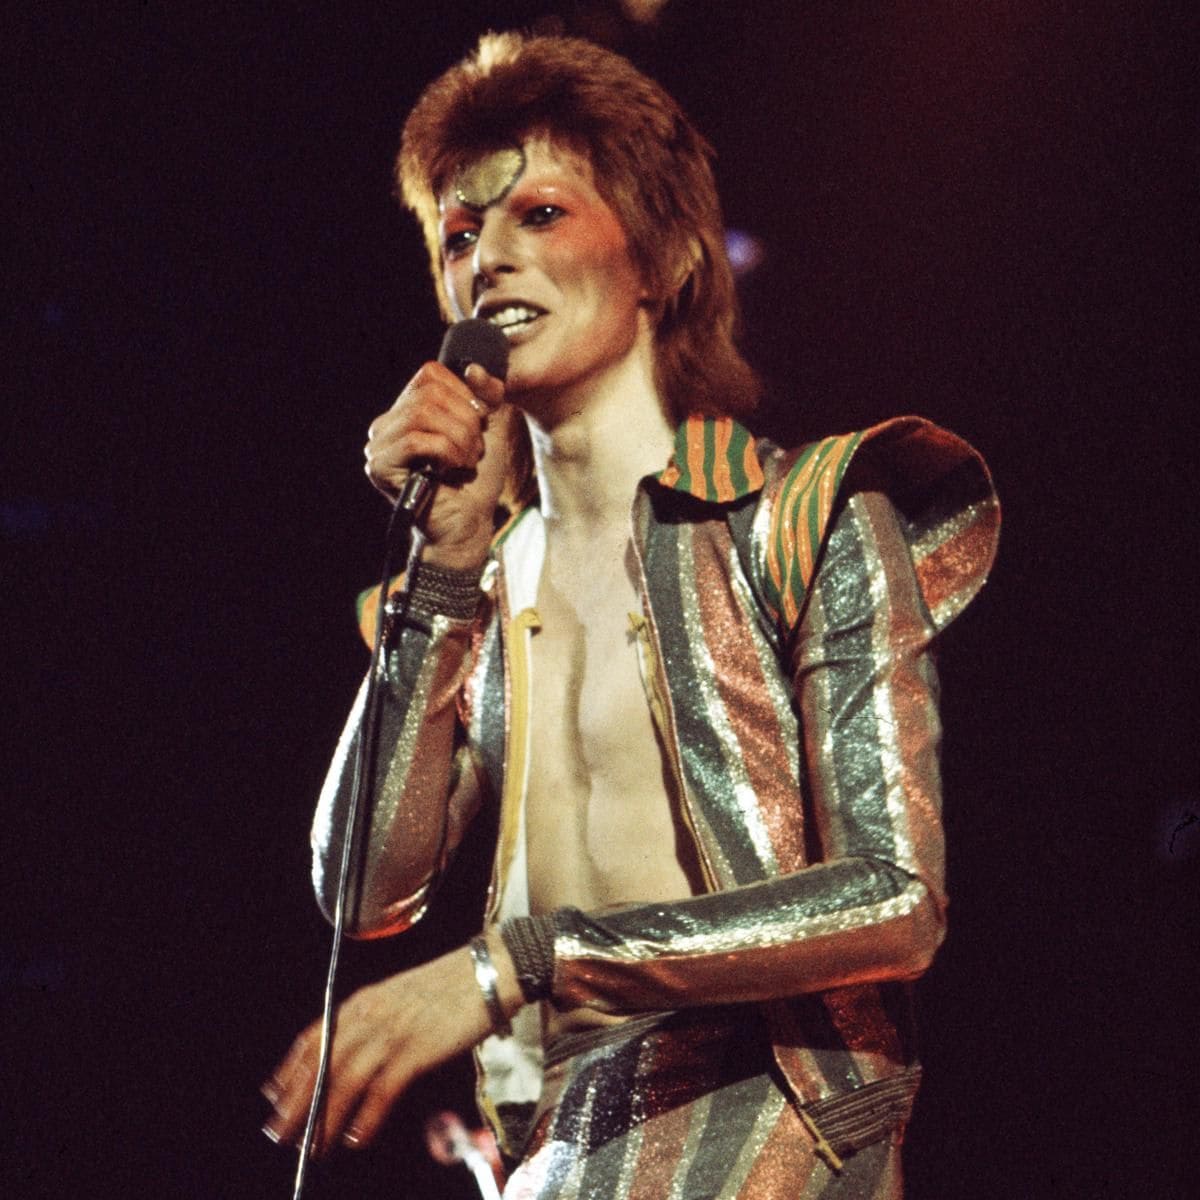 David Bowie portraying Ziggy Stardust onstage